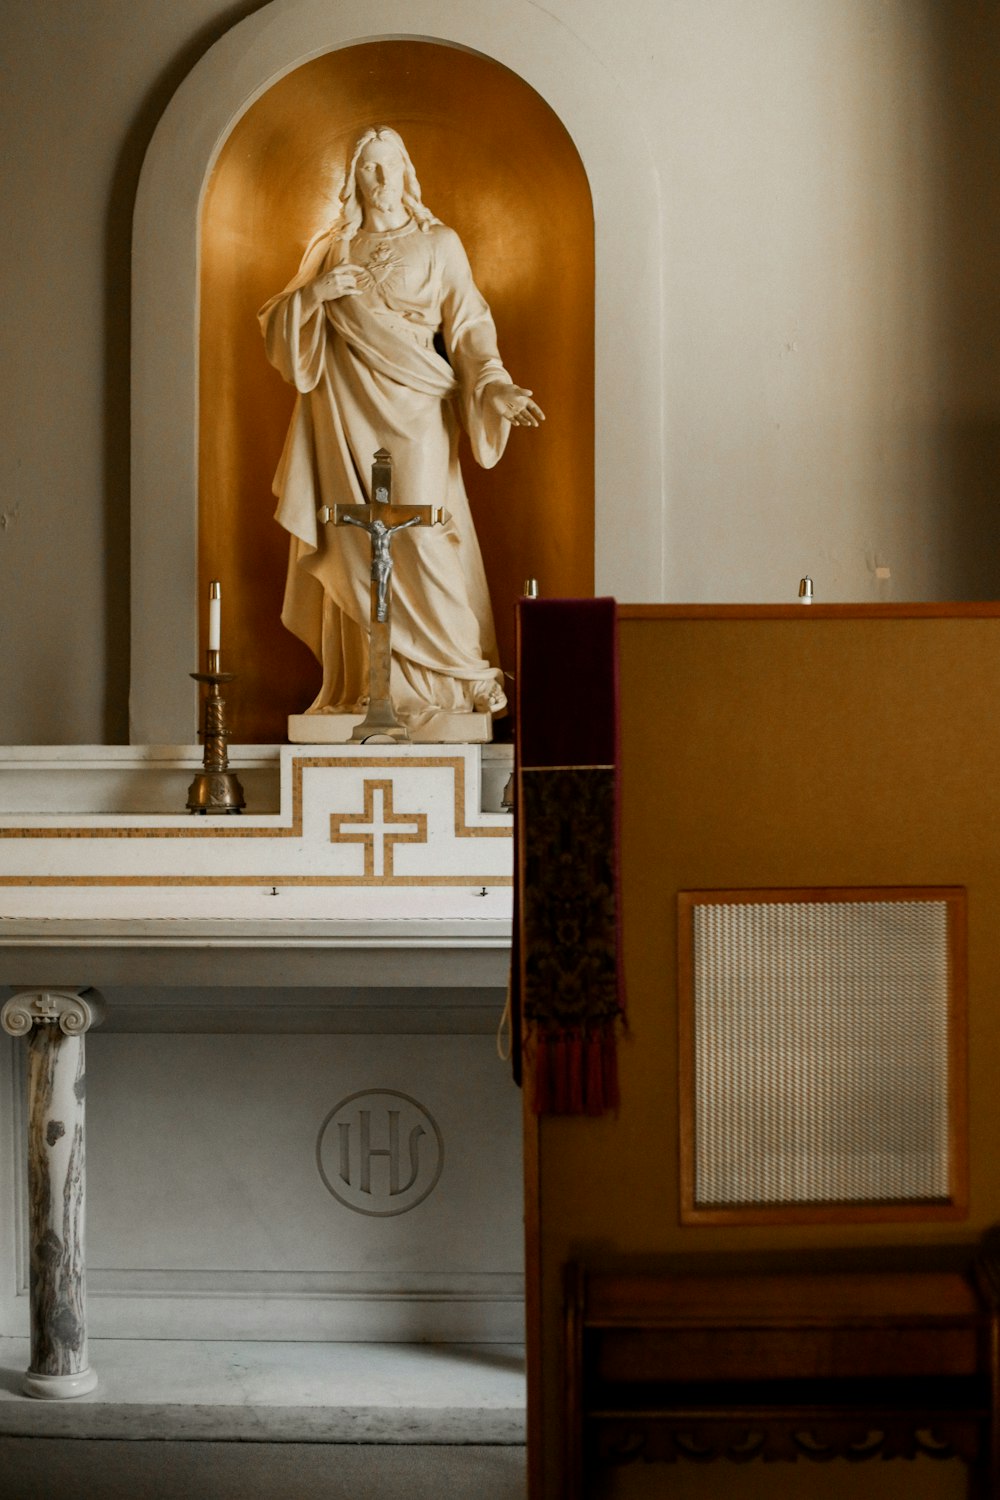 a statue of jesus in a church setting